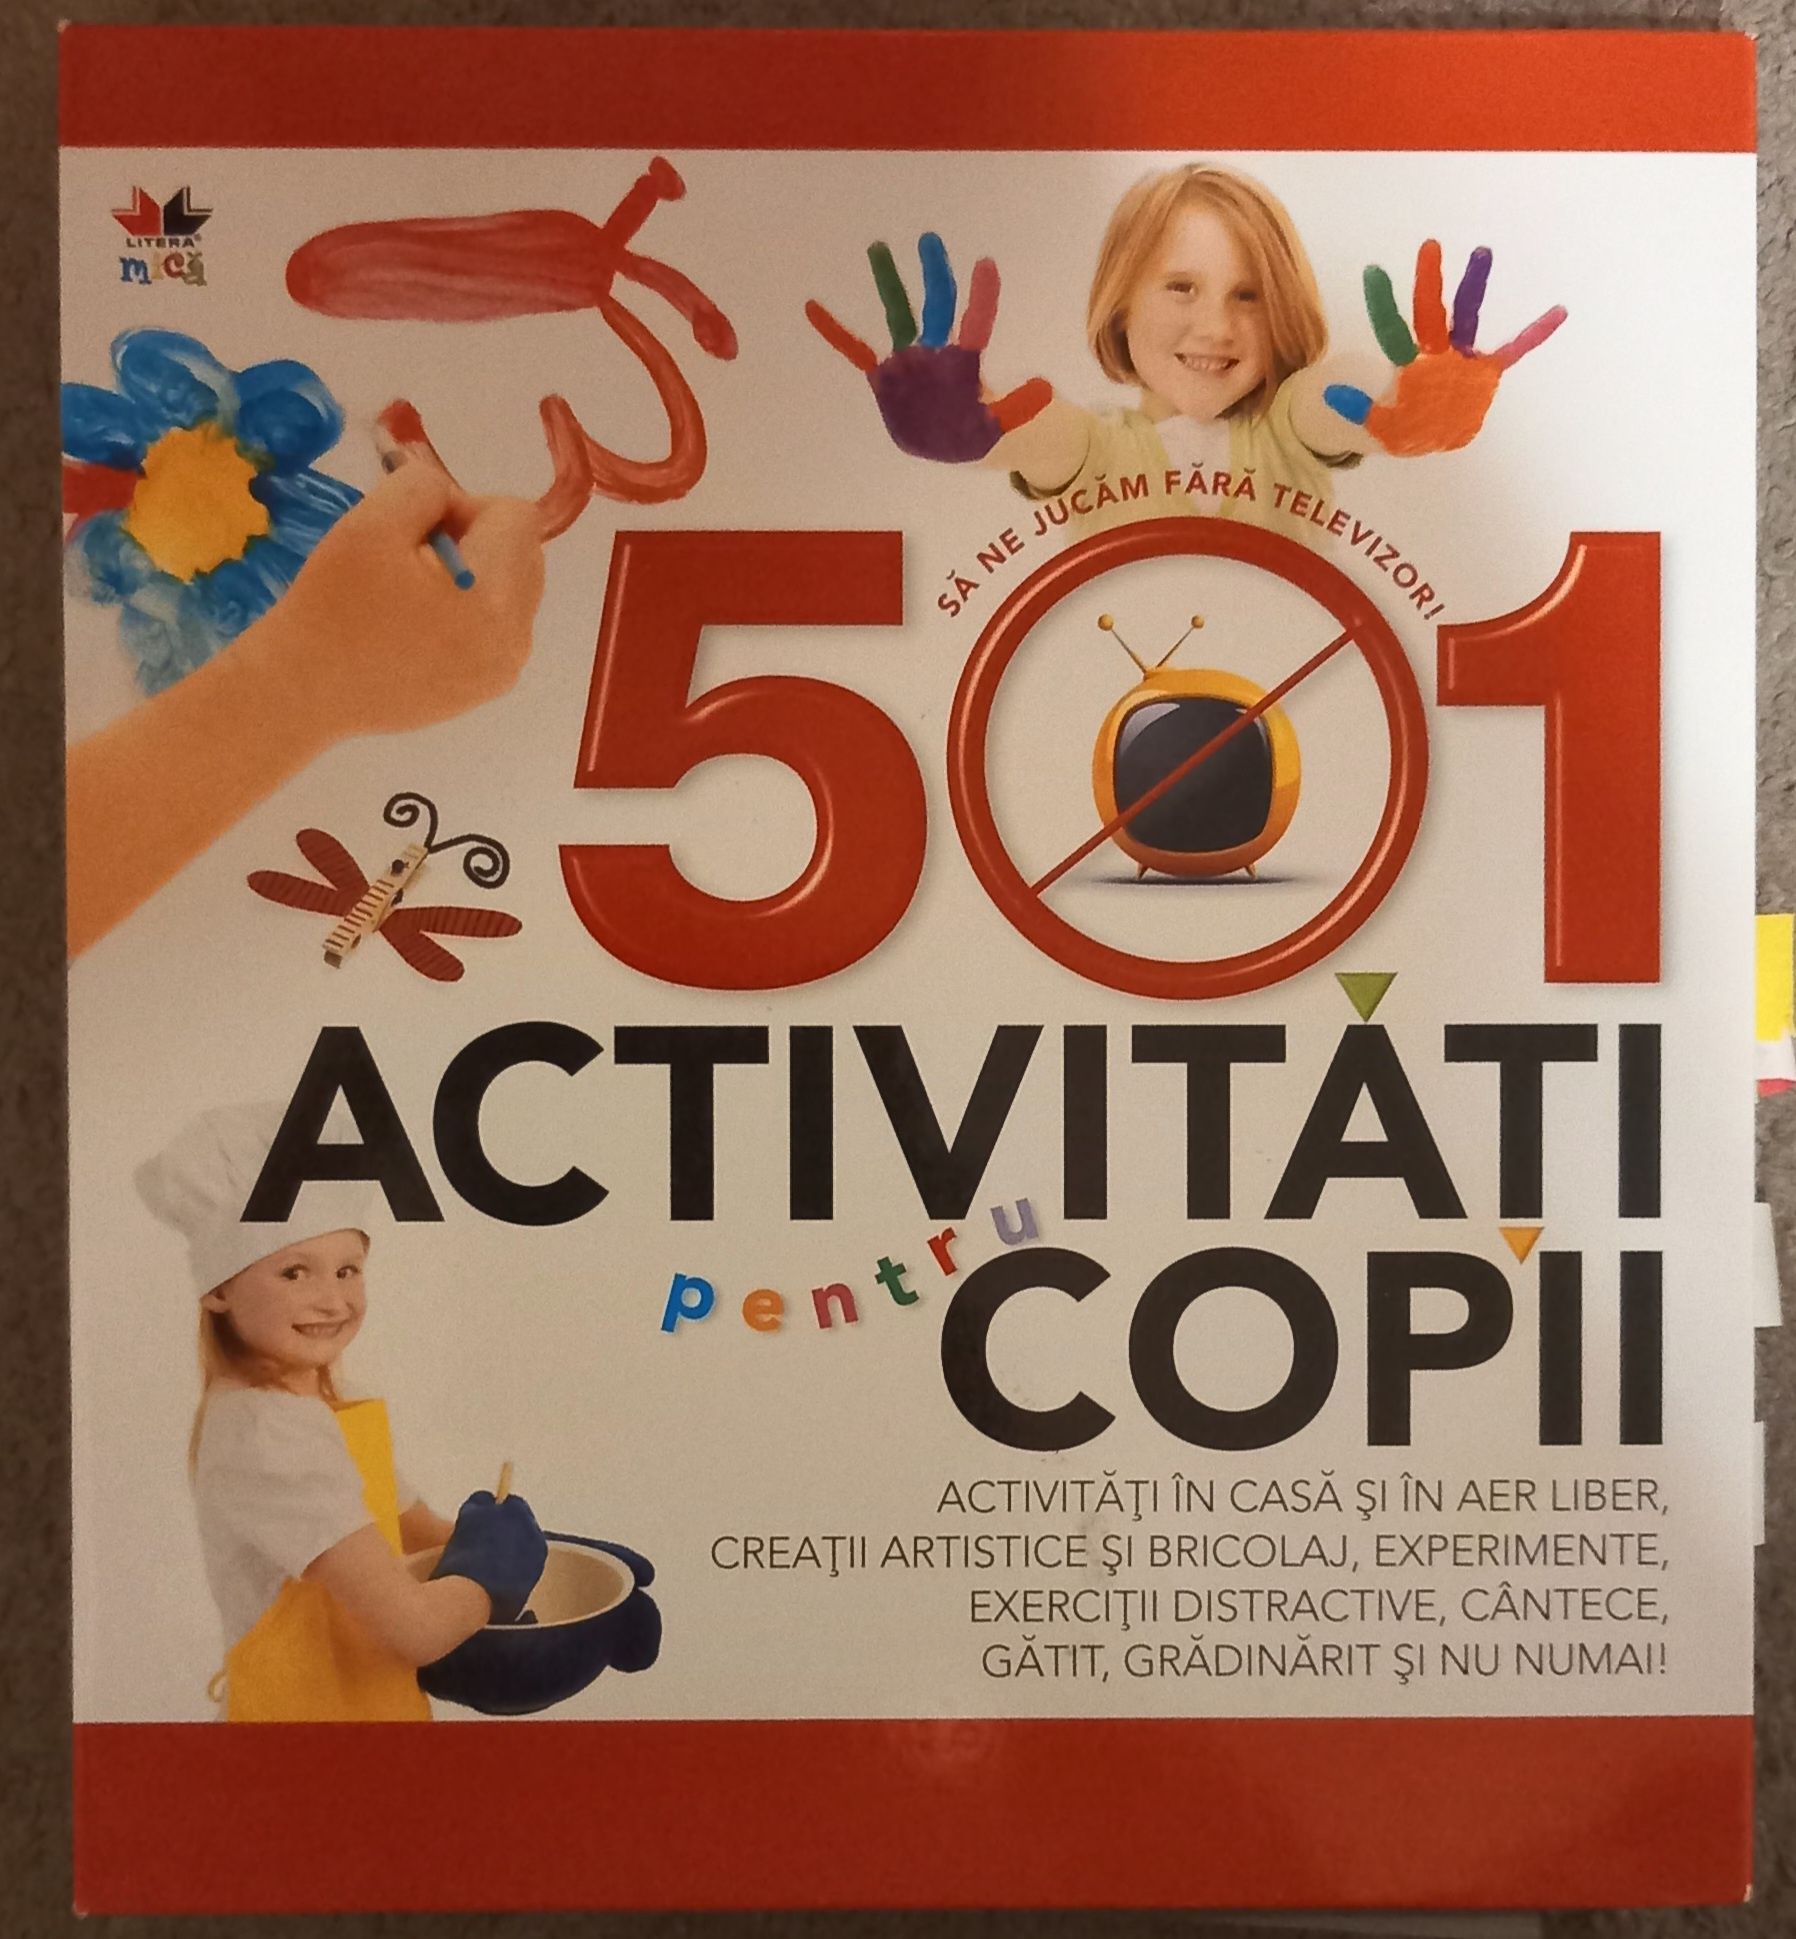 501 activitati pentru copii